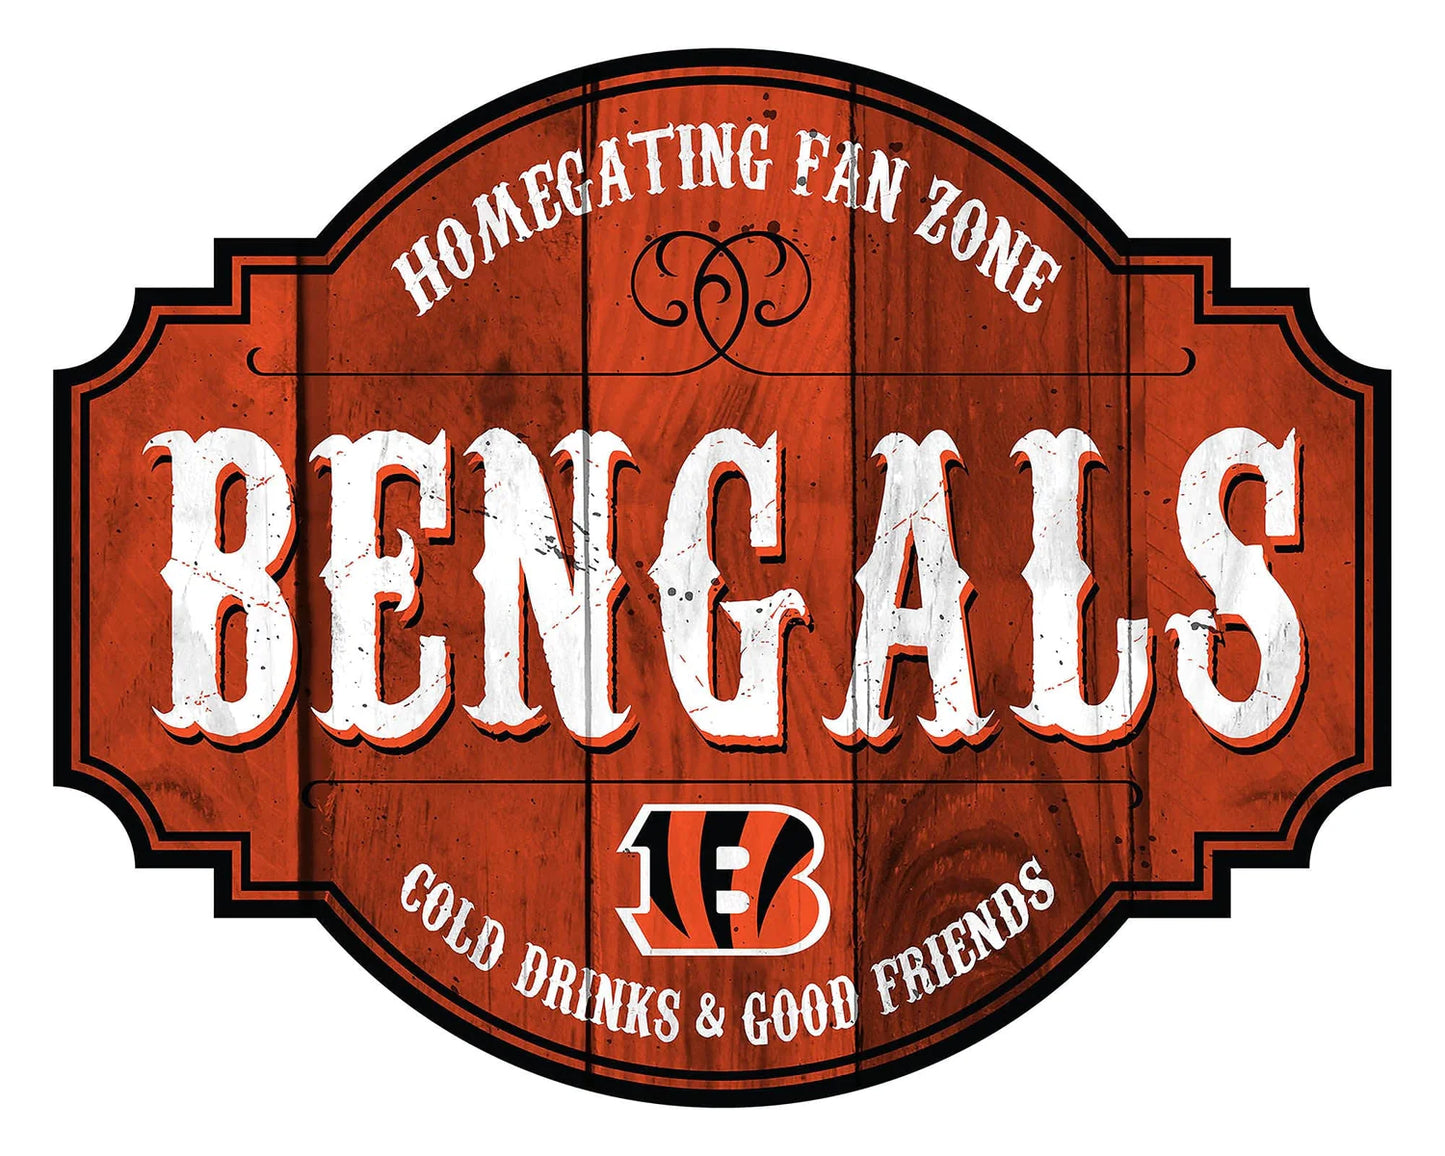 Cincinnati Bengals Homegating Tavern 24 in Sign